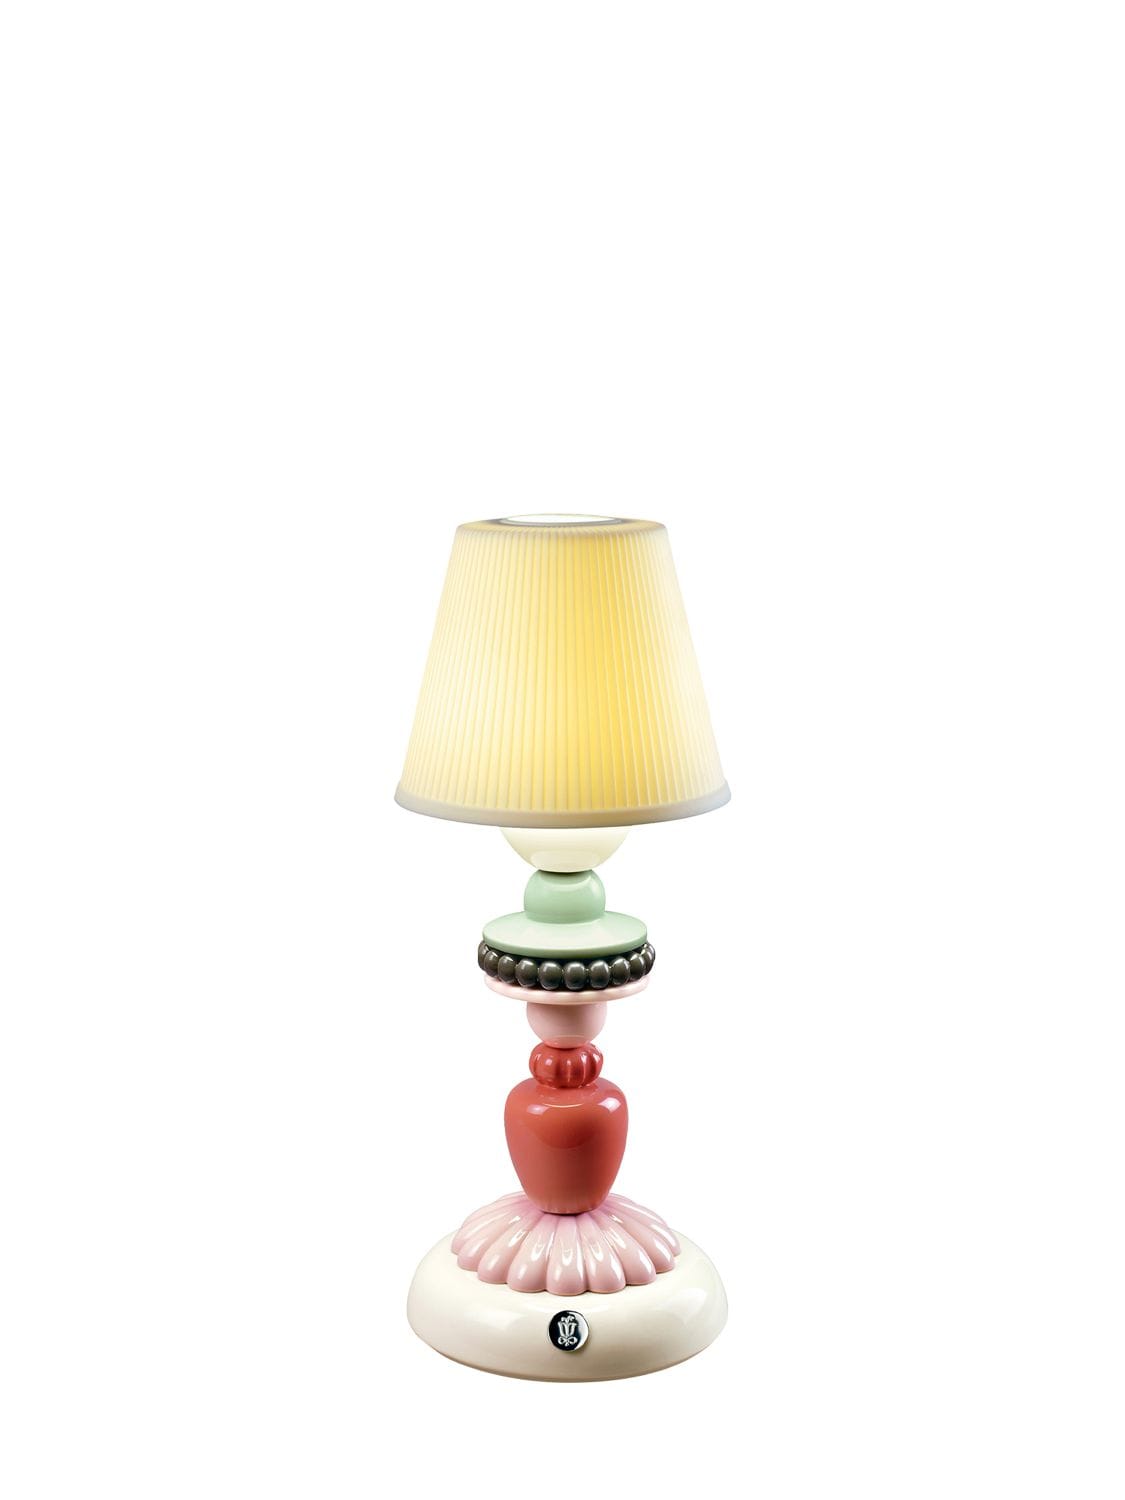 LLADRÒ FIREFLY LOTUS TABLE LAMP